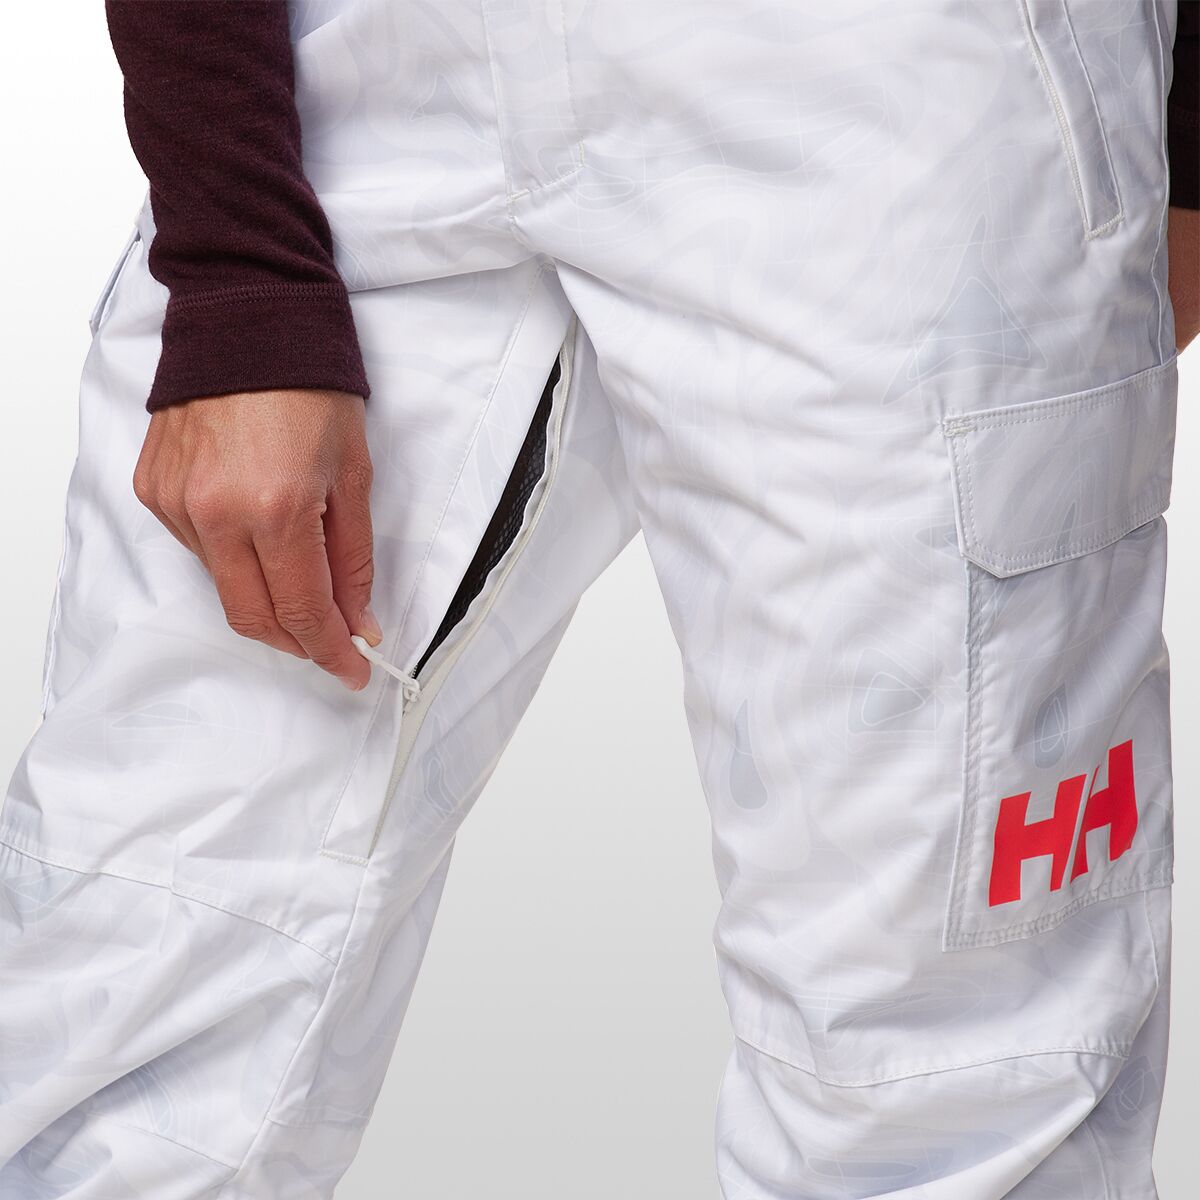 Helly Hansen Switch Cargo Insulated Women's Pants, Alpine / Apparel